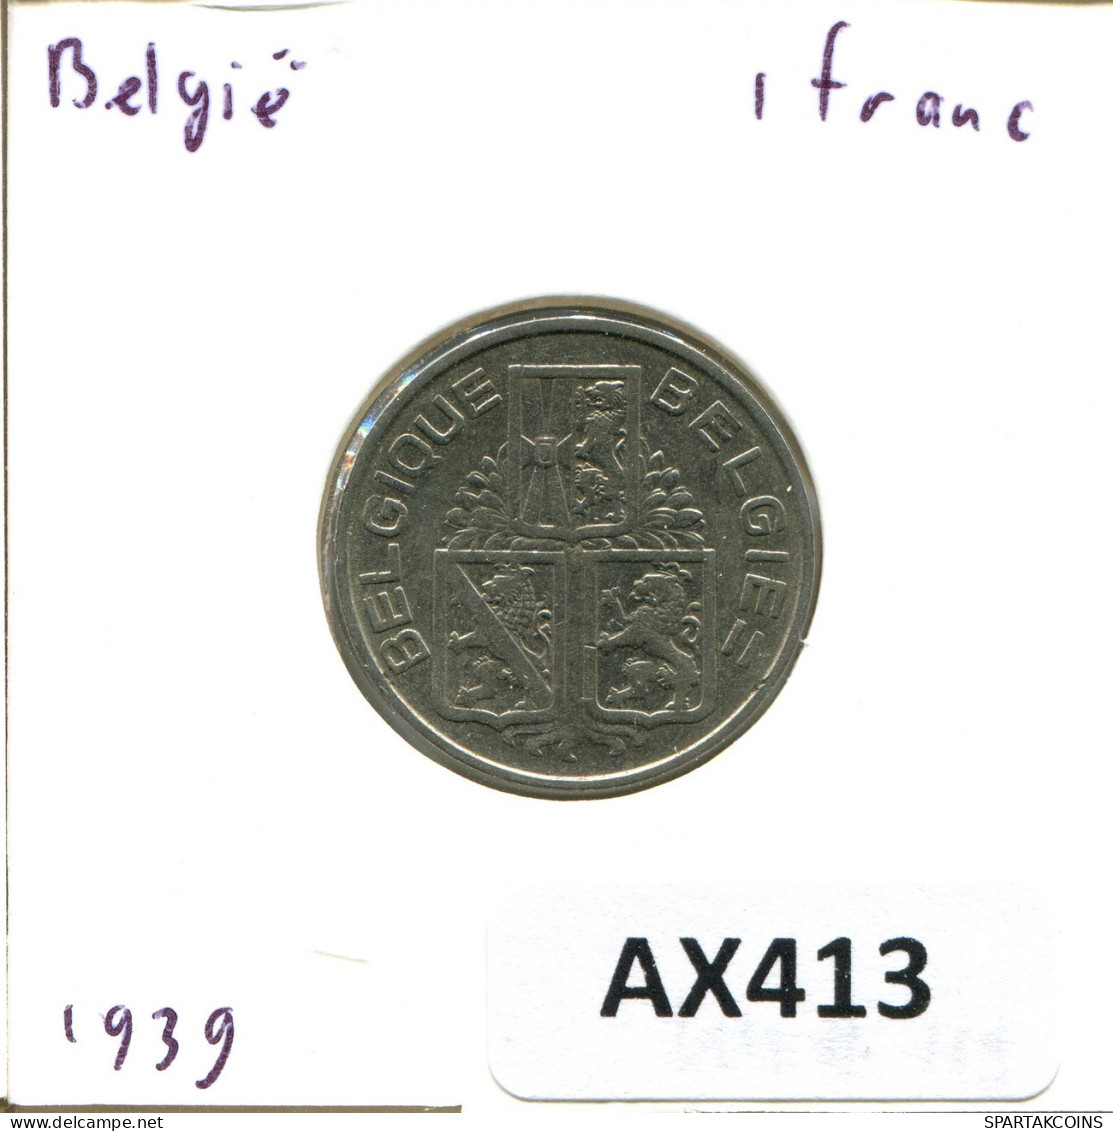 1 FRANC 1939 BÉLGICA BELGIUM Moneda BELGIE-BELGIQUE #AX413.E.A - 1 Frank